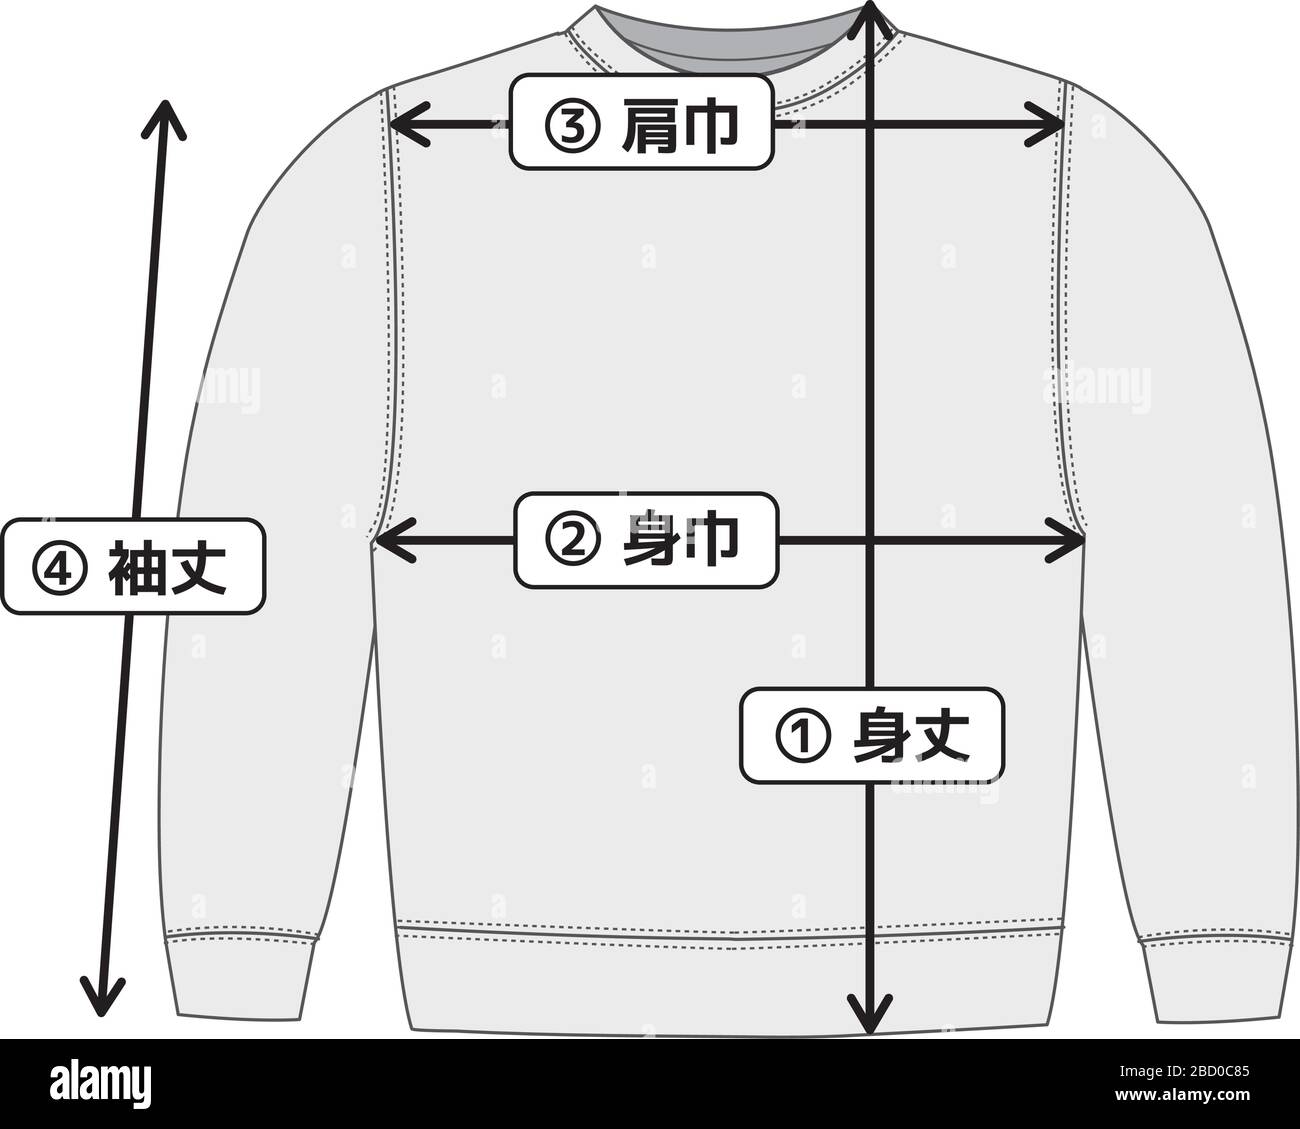 sweatshirt illustration for size chart Stock Vector